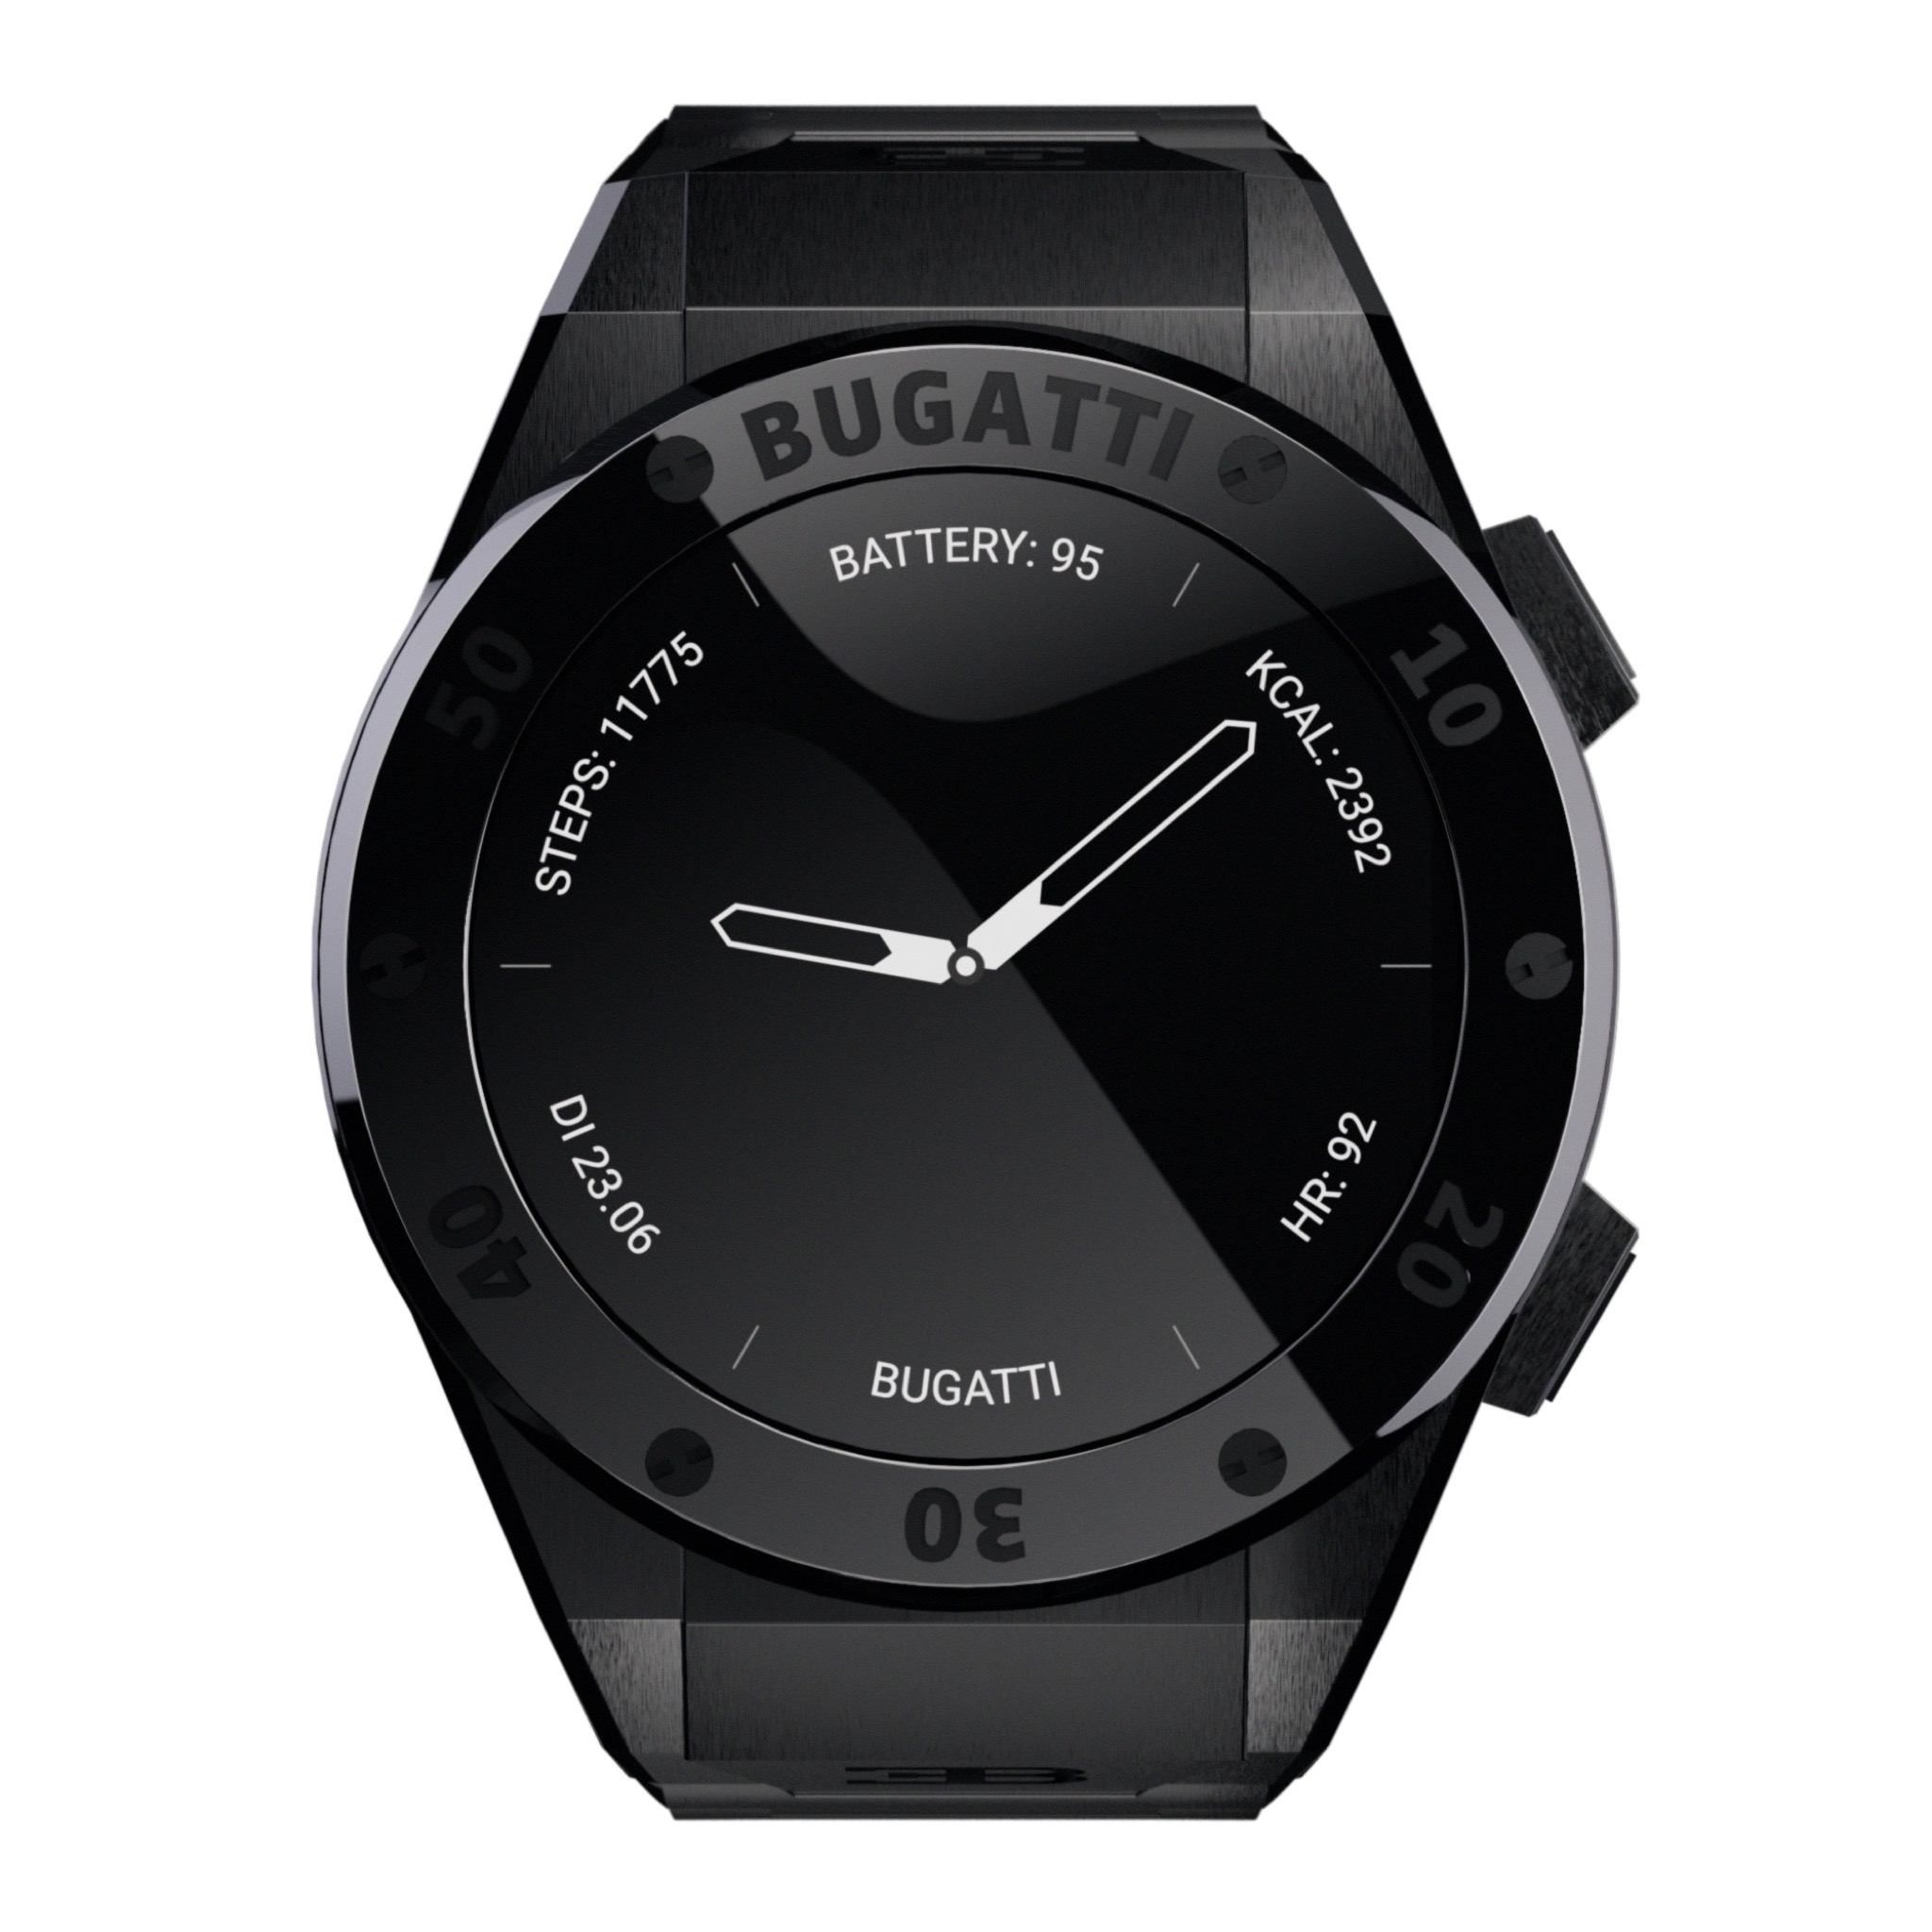 tinhte_bugatti_smart_watch_17.jpg